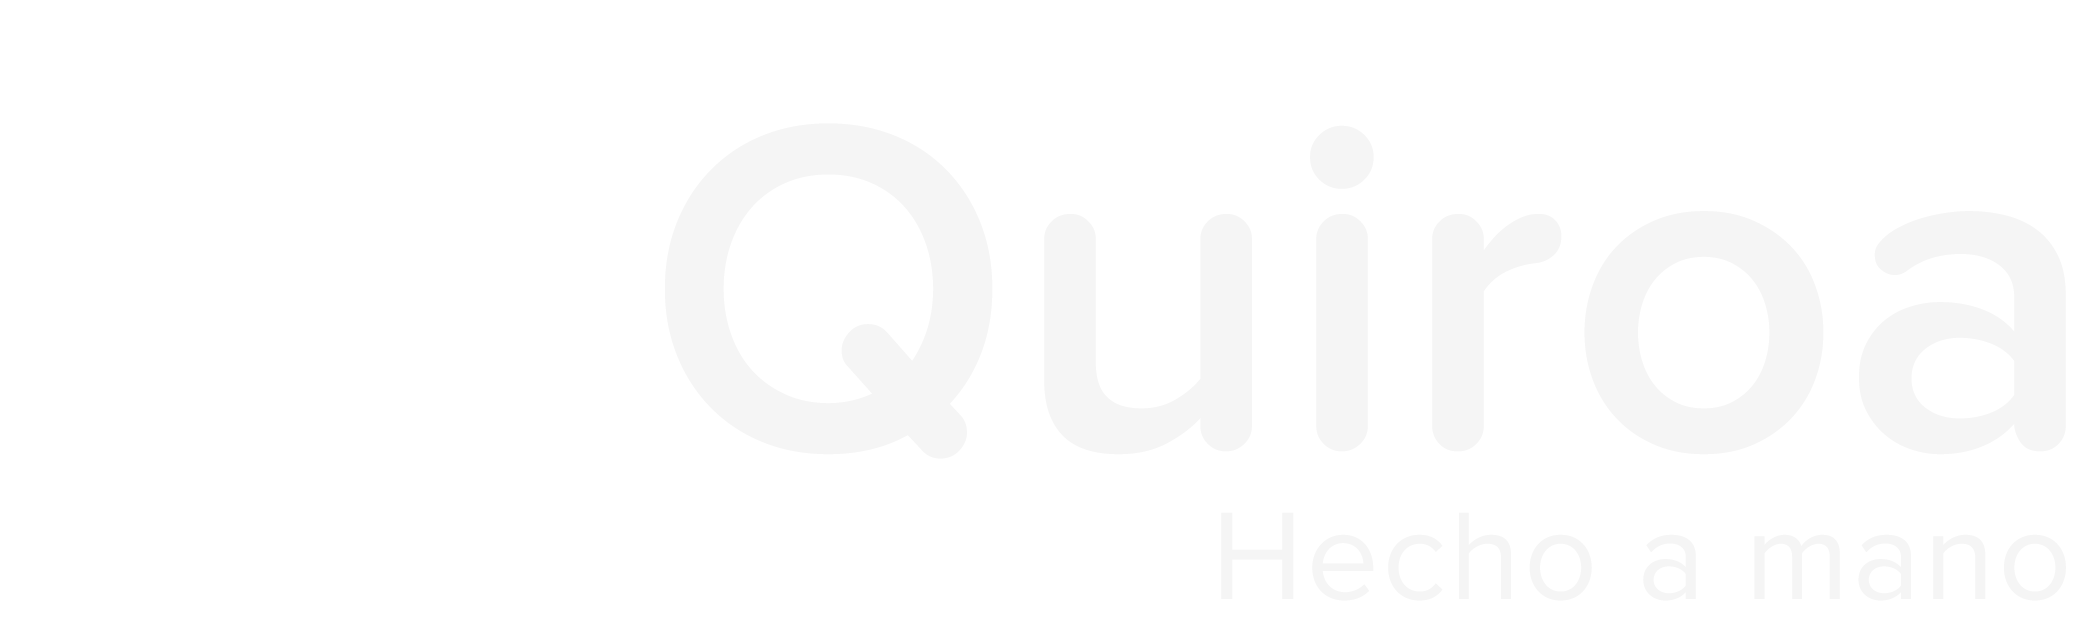 QUIROA-Logotipo blanco